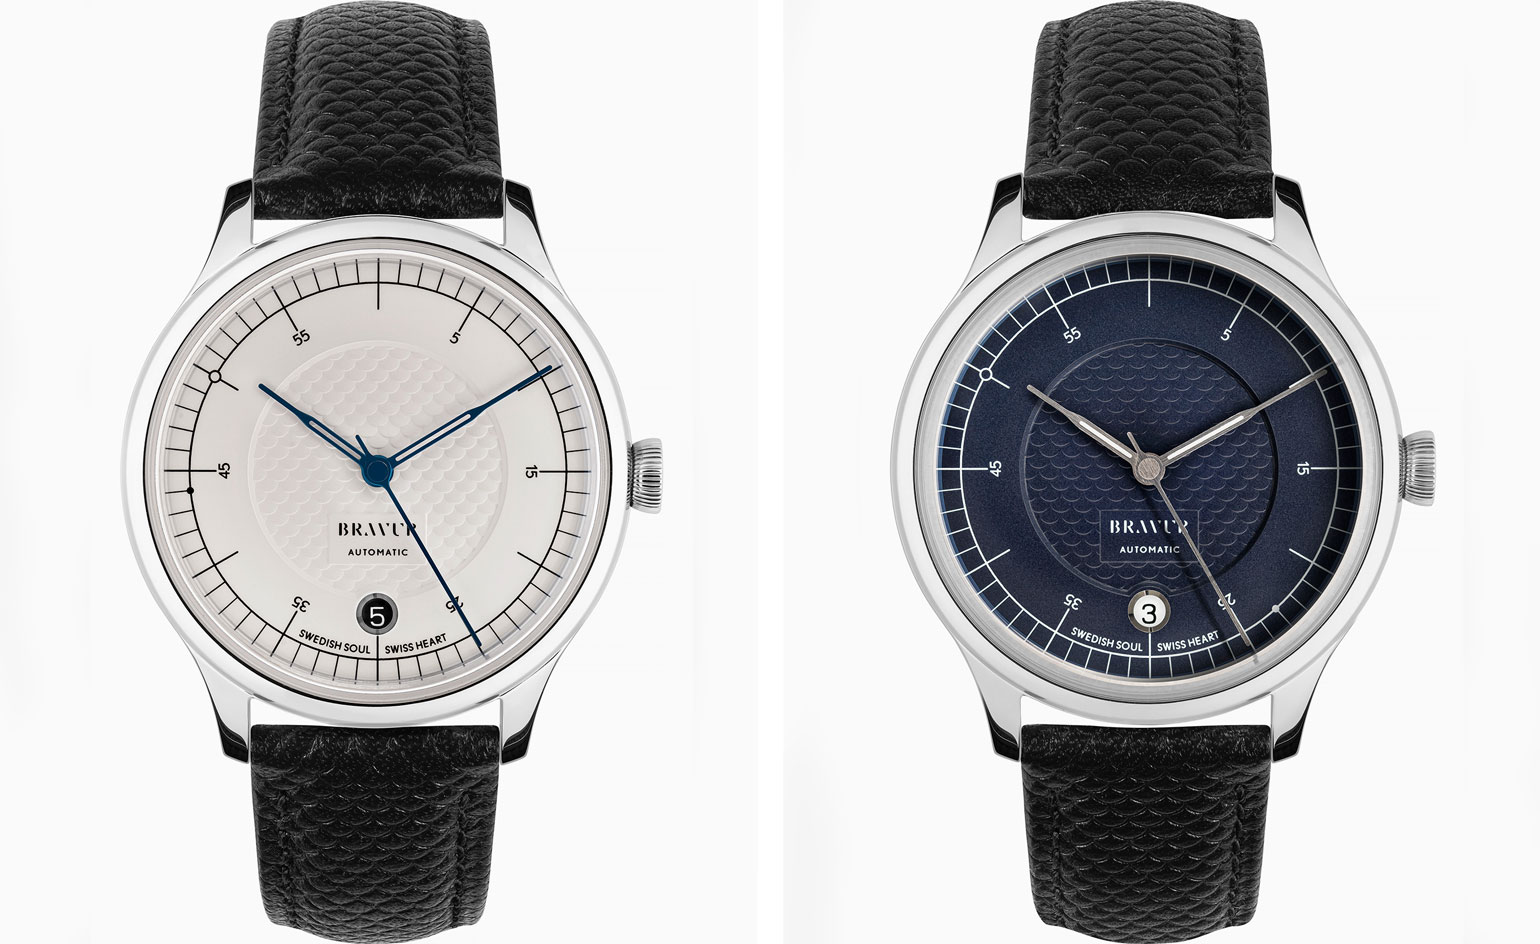 PICS] Swiss luxury watch brand Longines has unveiled a new brand